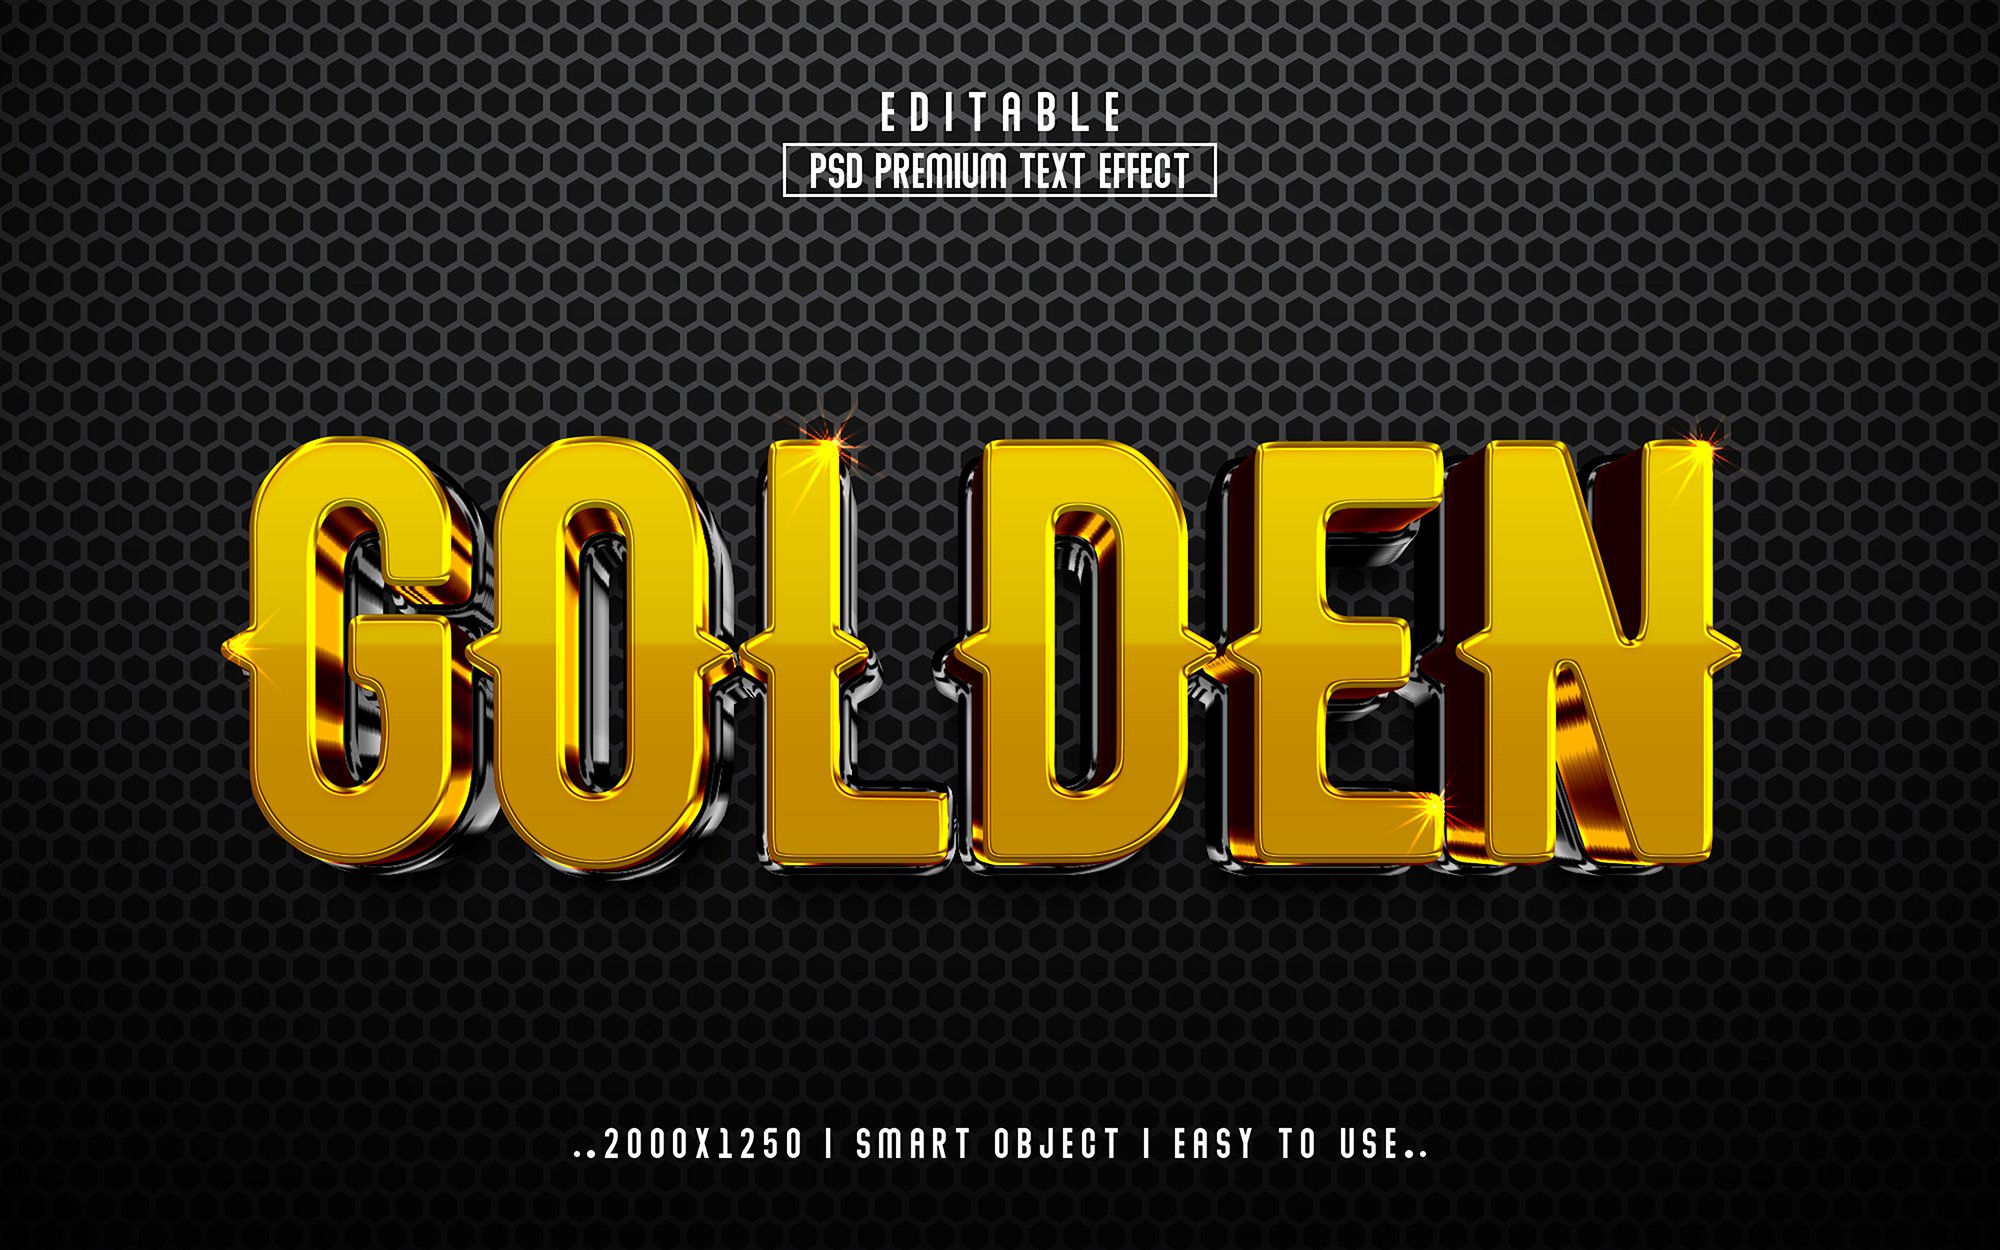 Golden 3D Editable Text Effect stylecover image.